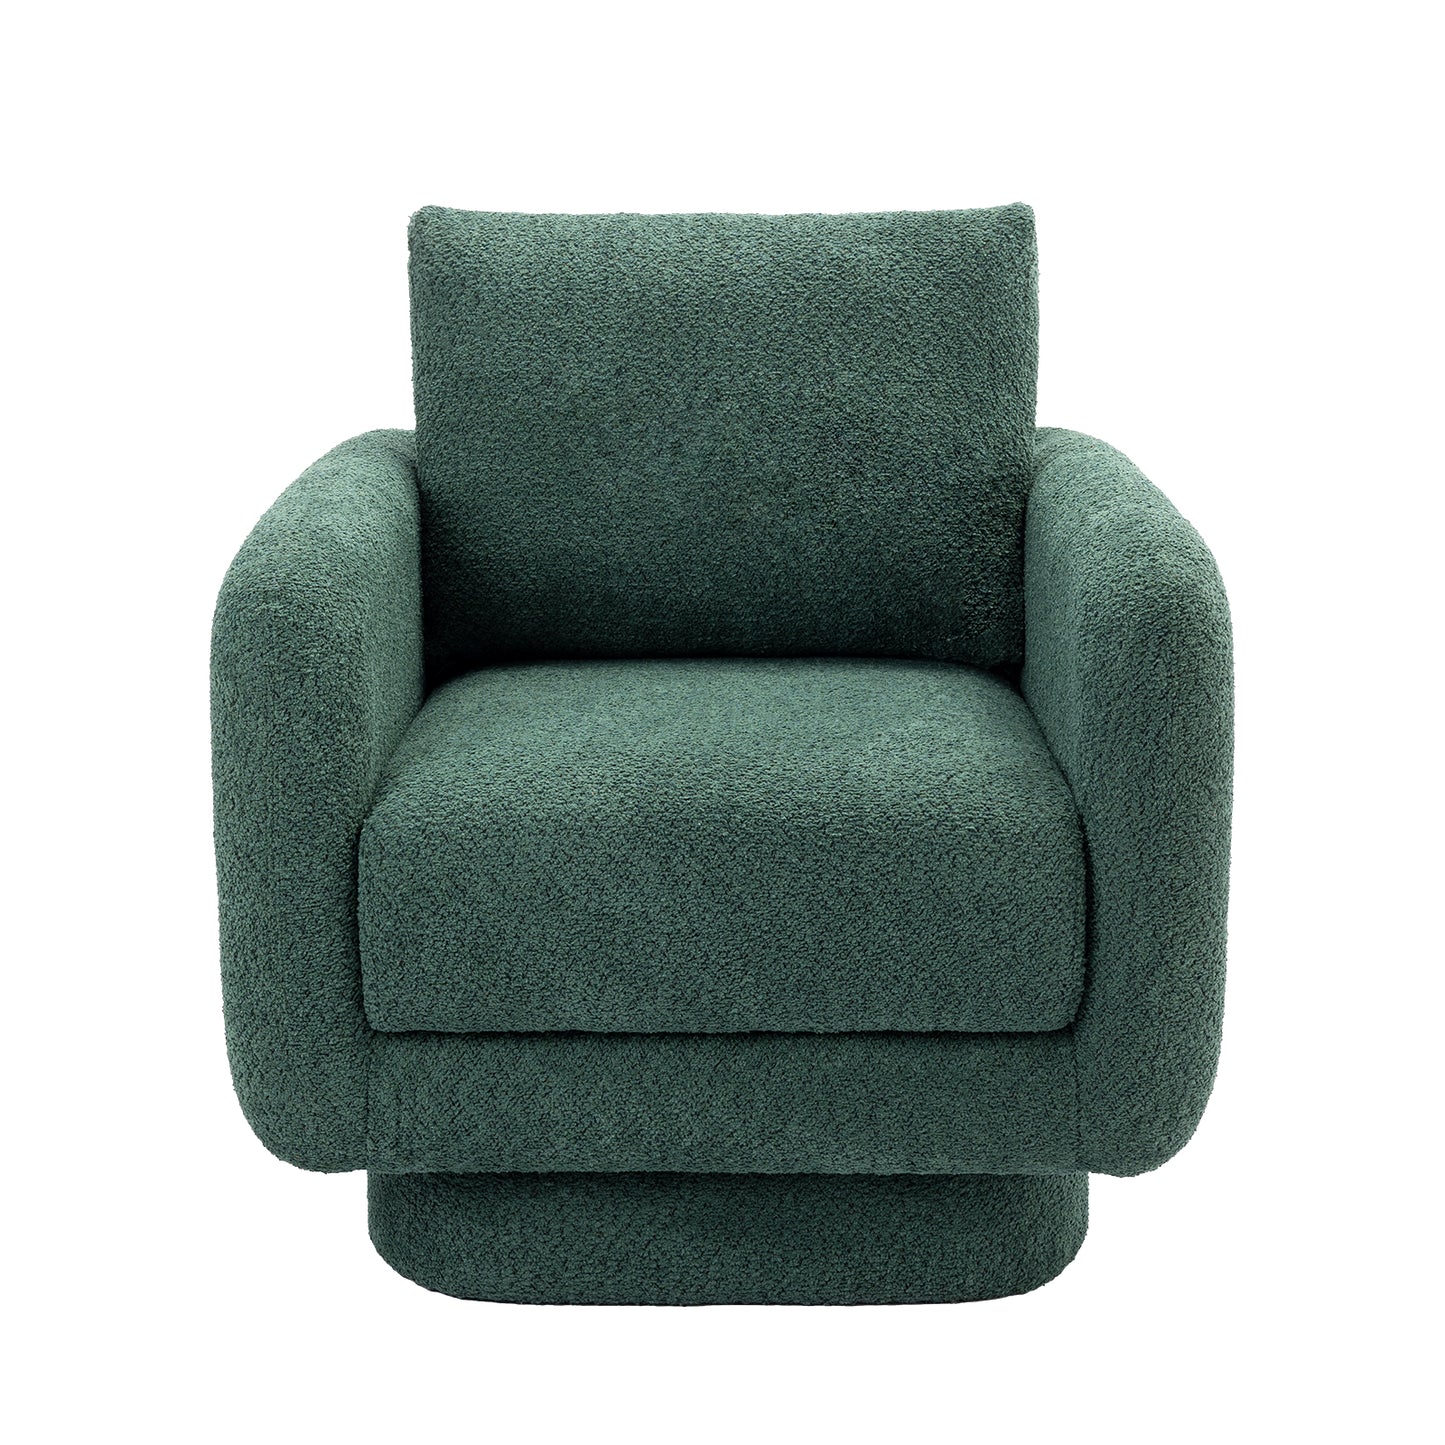 COLAMY Chenille Fabric 360° Swivel Accent Chair Model.W228